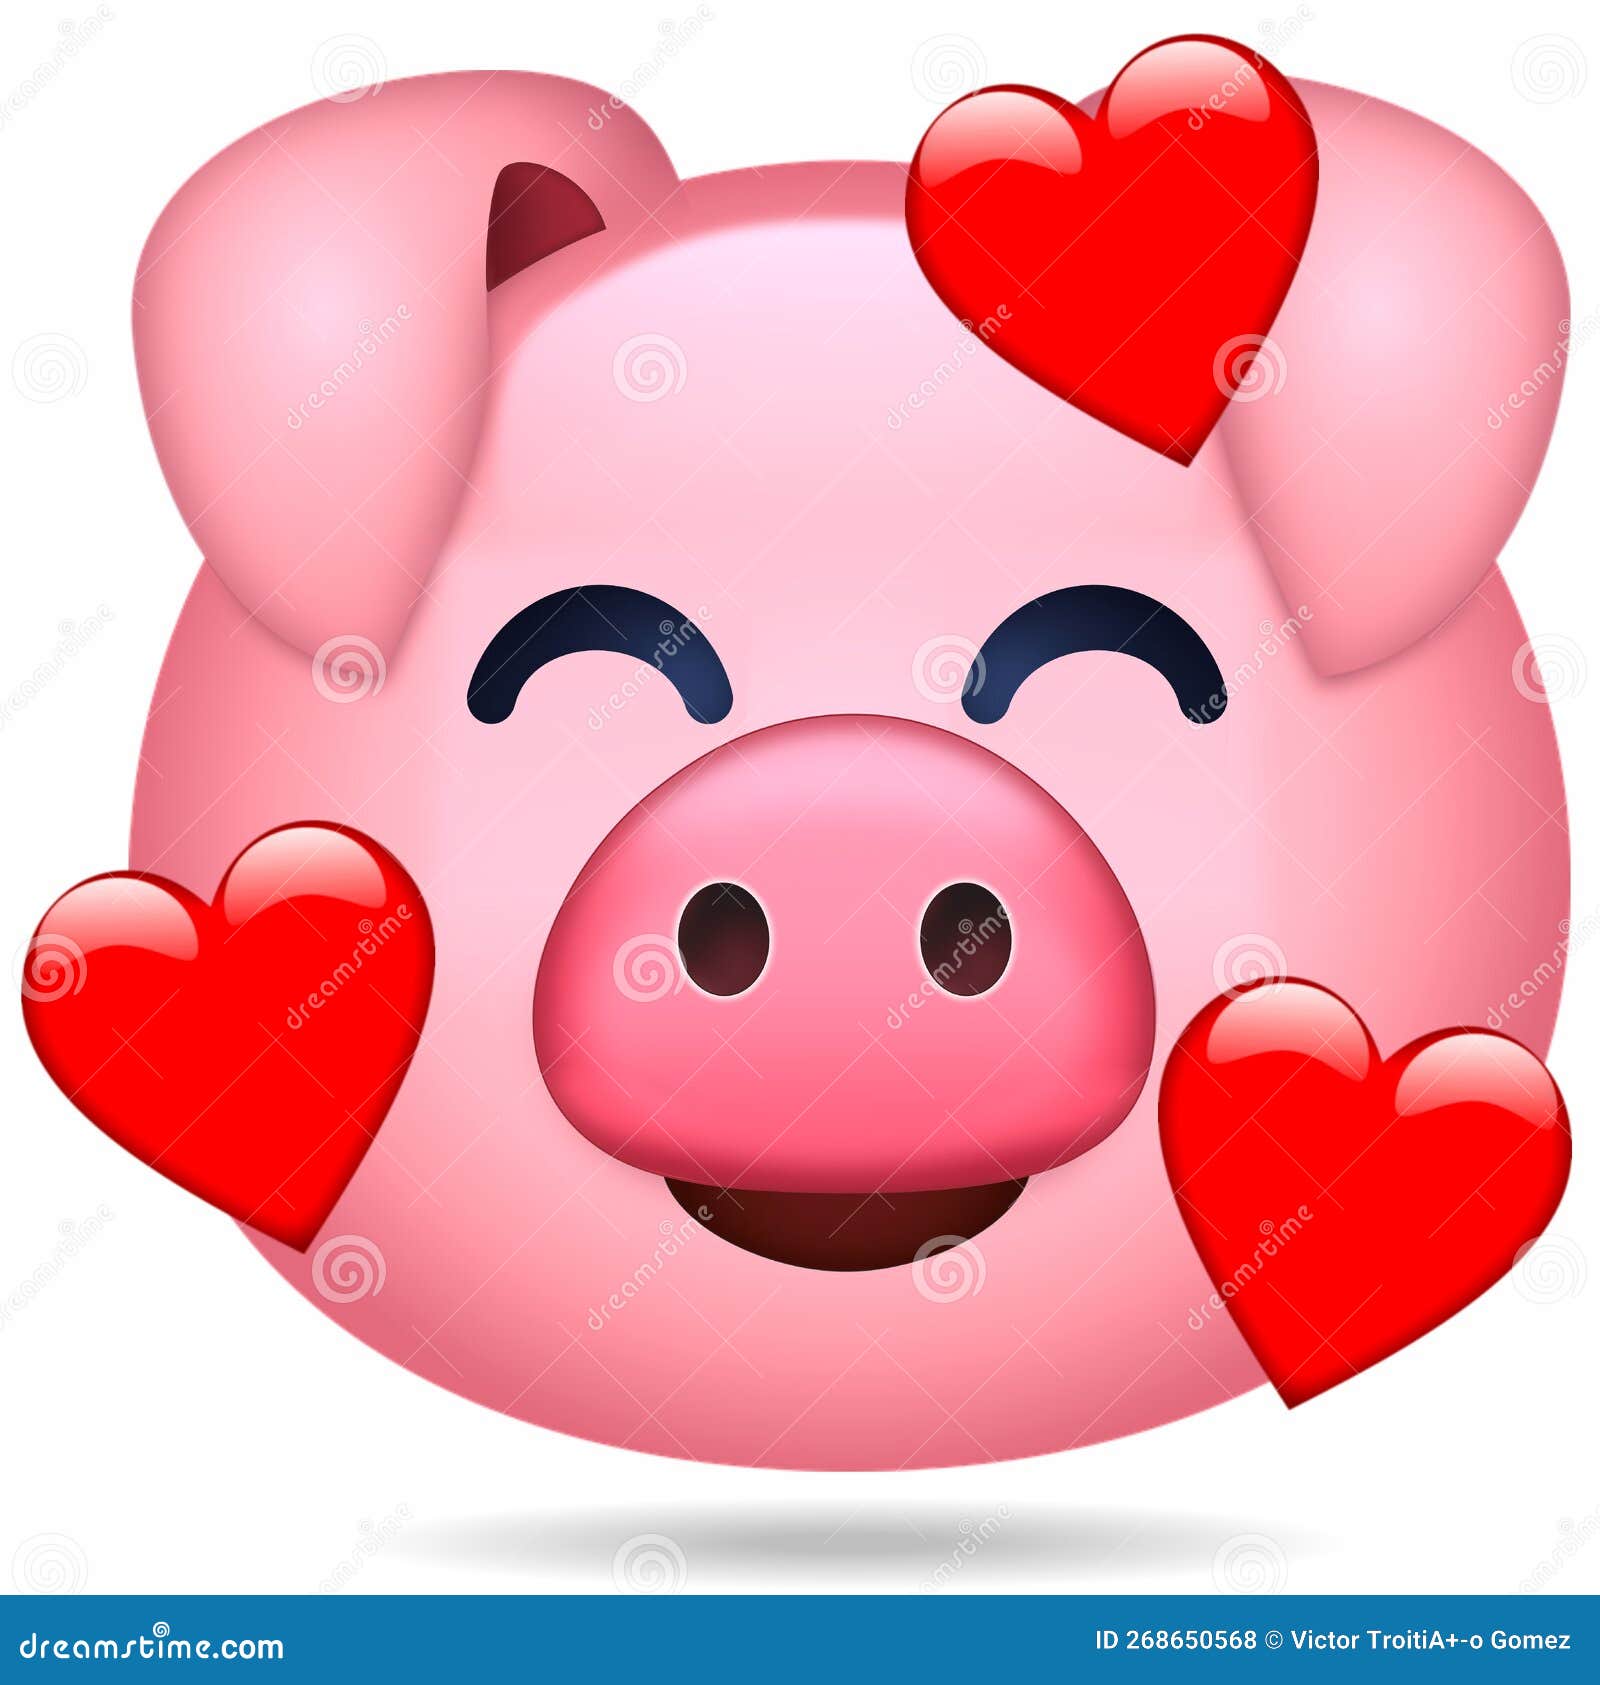 divertido emoticono de cerdo rosa